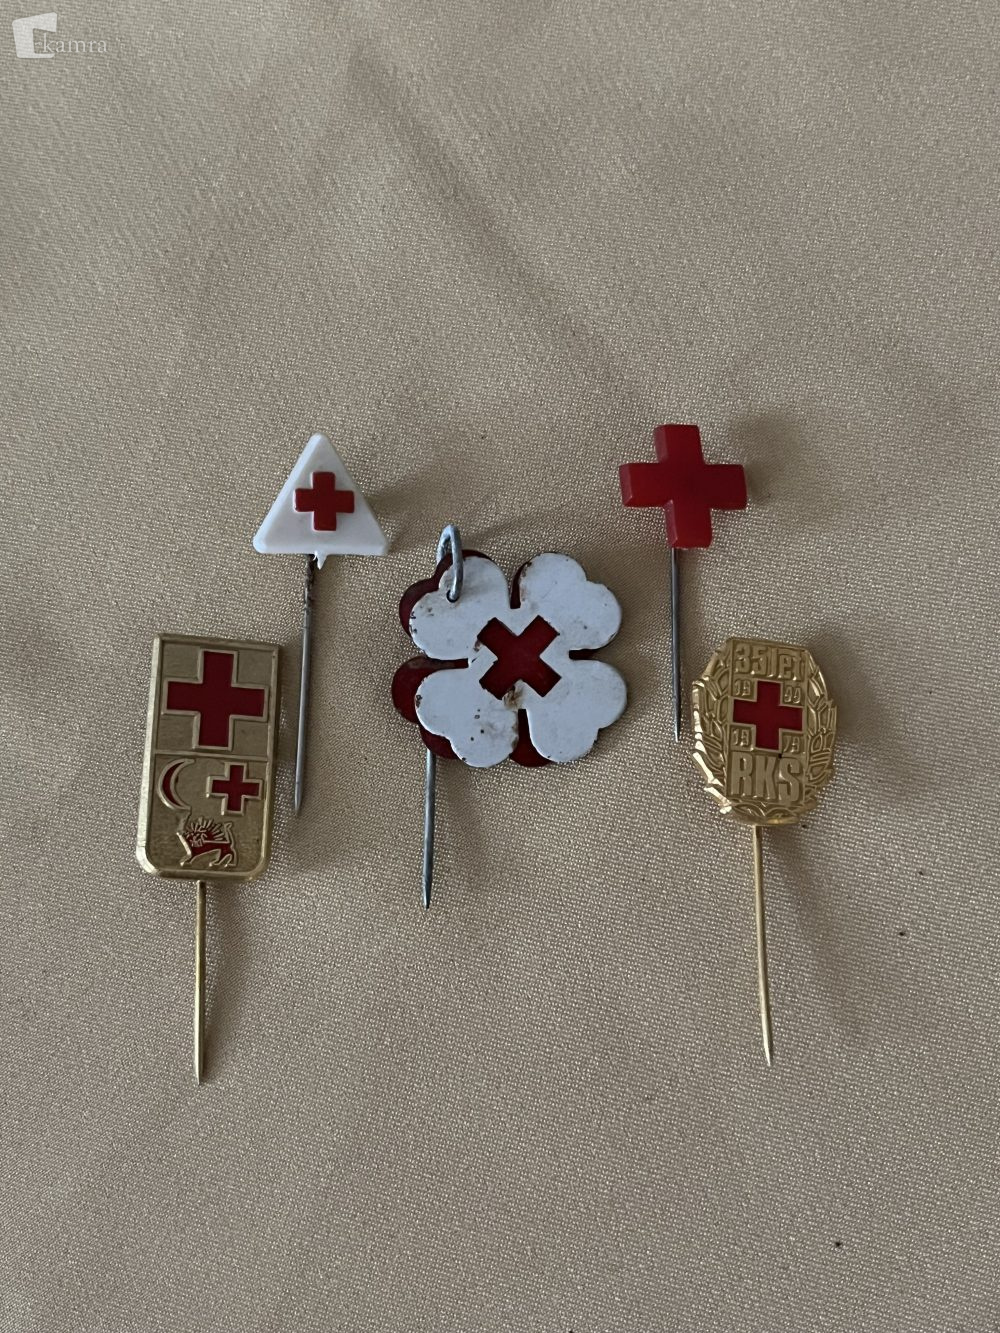 2. Rdeči križ Slovenije je humanitarna organizacija, ustanovljena leta 1944.